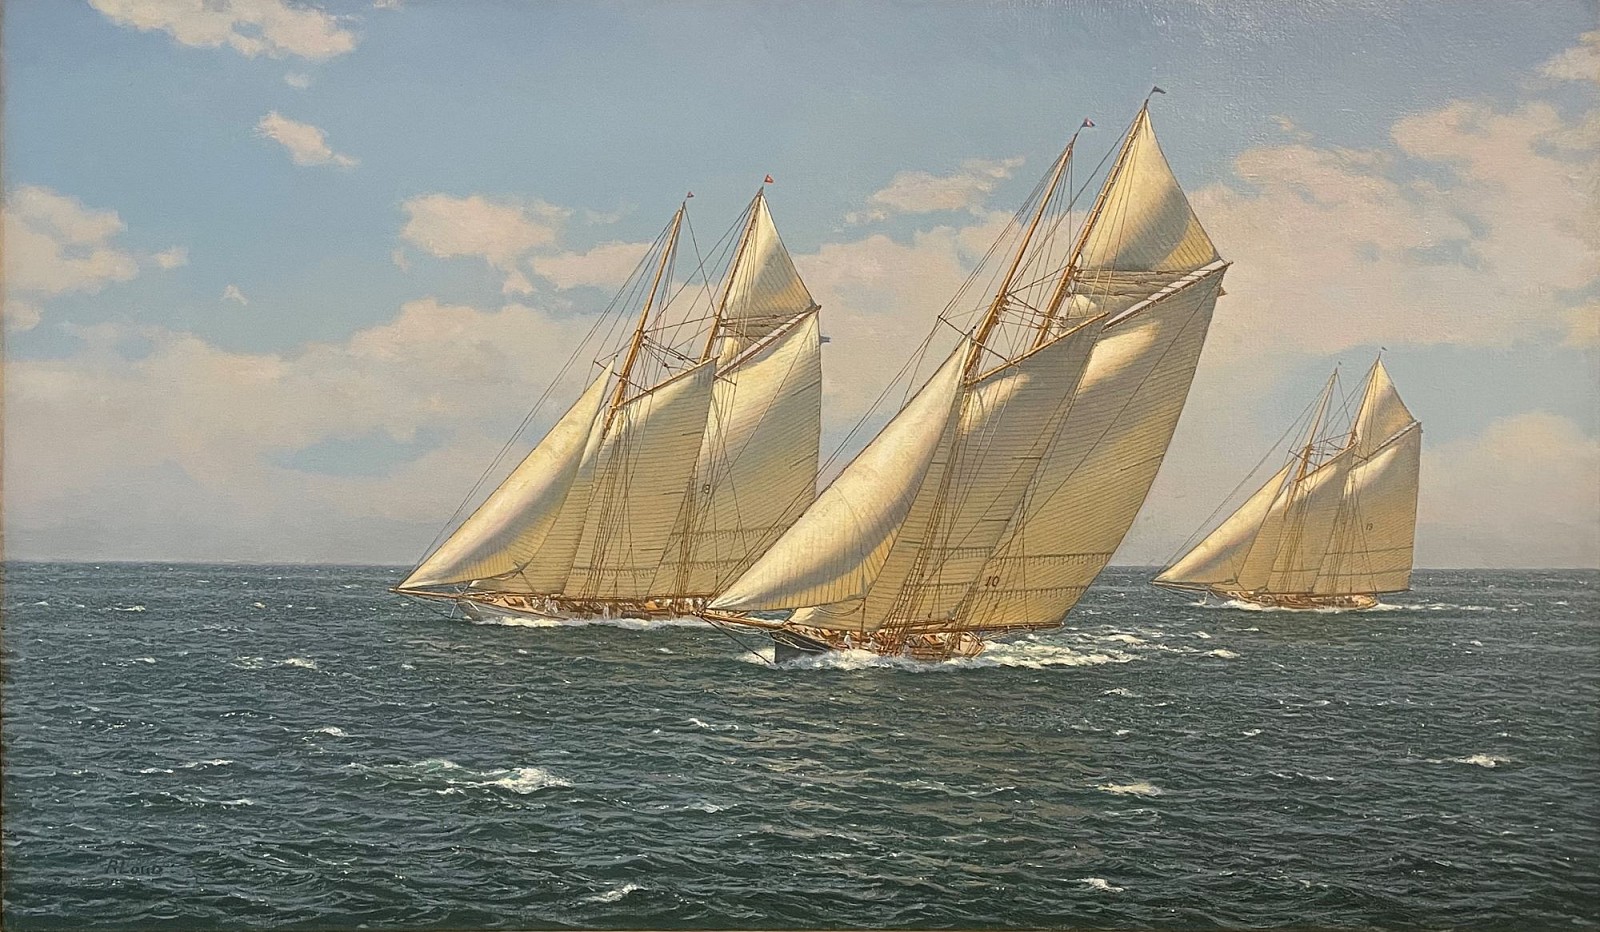 Richard Loud, Schooner Yacht Constellation, Winner of Puritan Cup 1899, Marblehead EYC
oil on canvas, 26 x 44 in. (66 x 111.8 cm)
RL240401